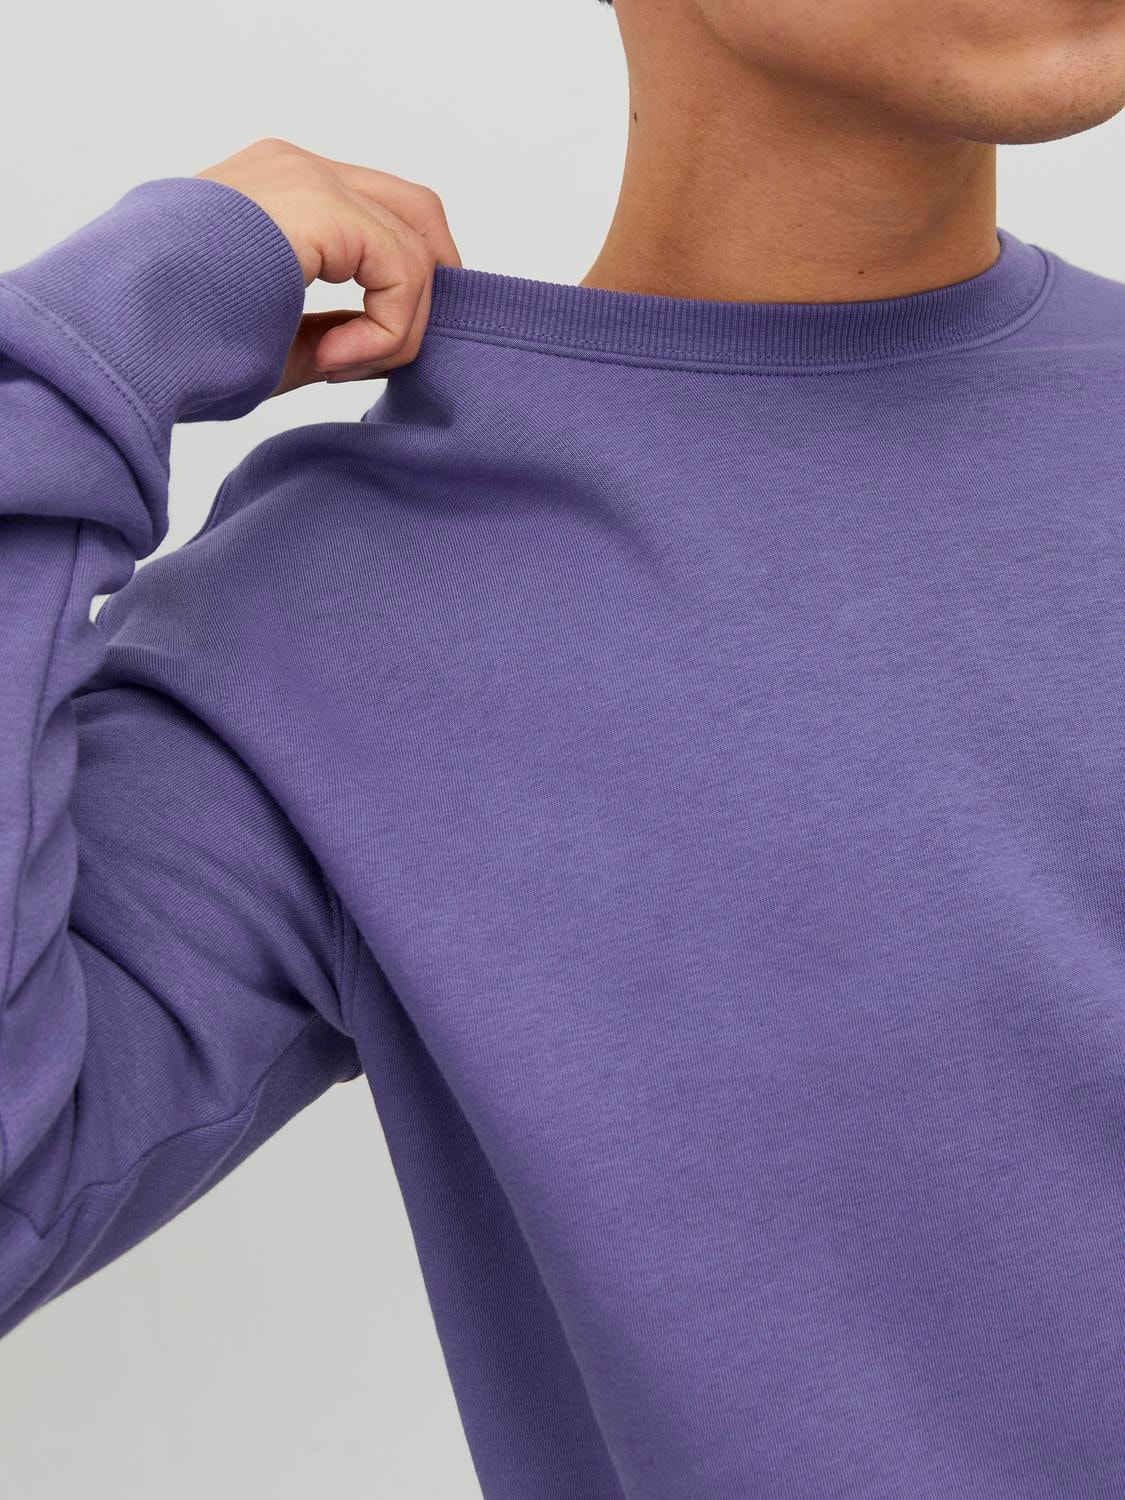 Jack & Jones Plain Crew neck Sweatshirt -Twilight Purple - 12208182